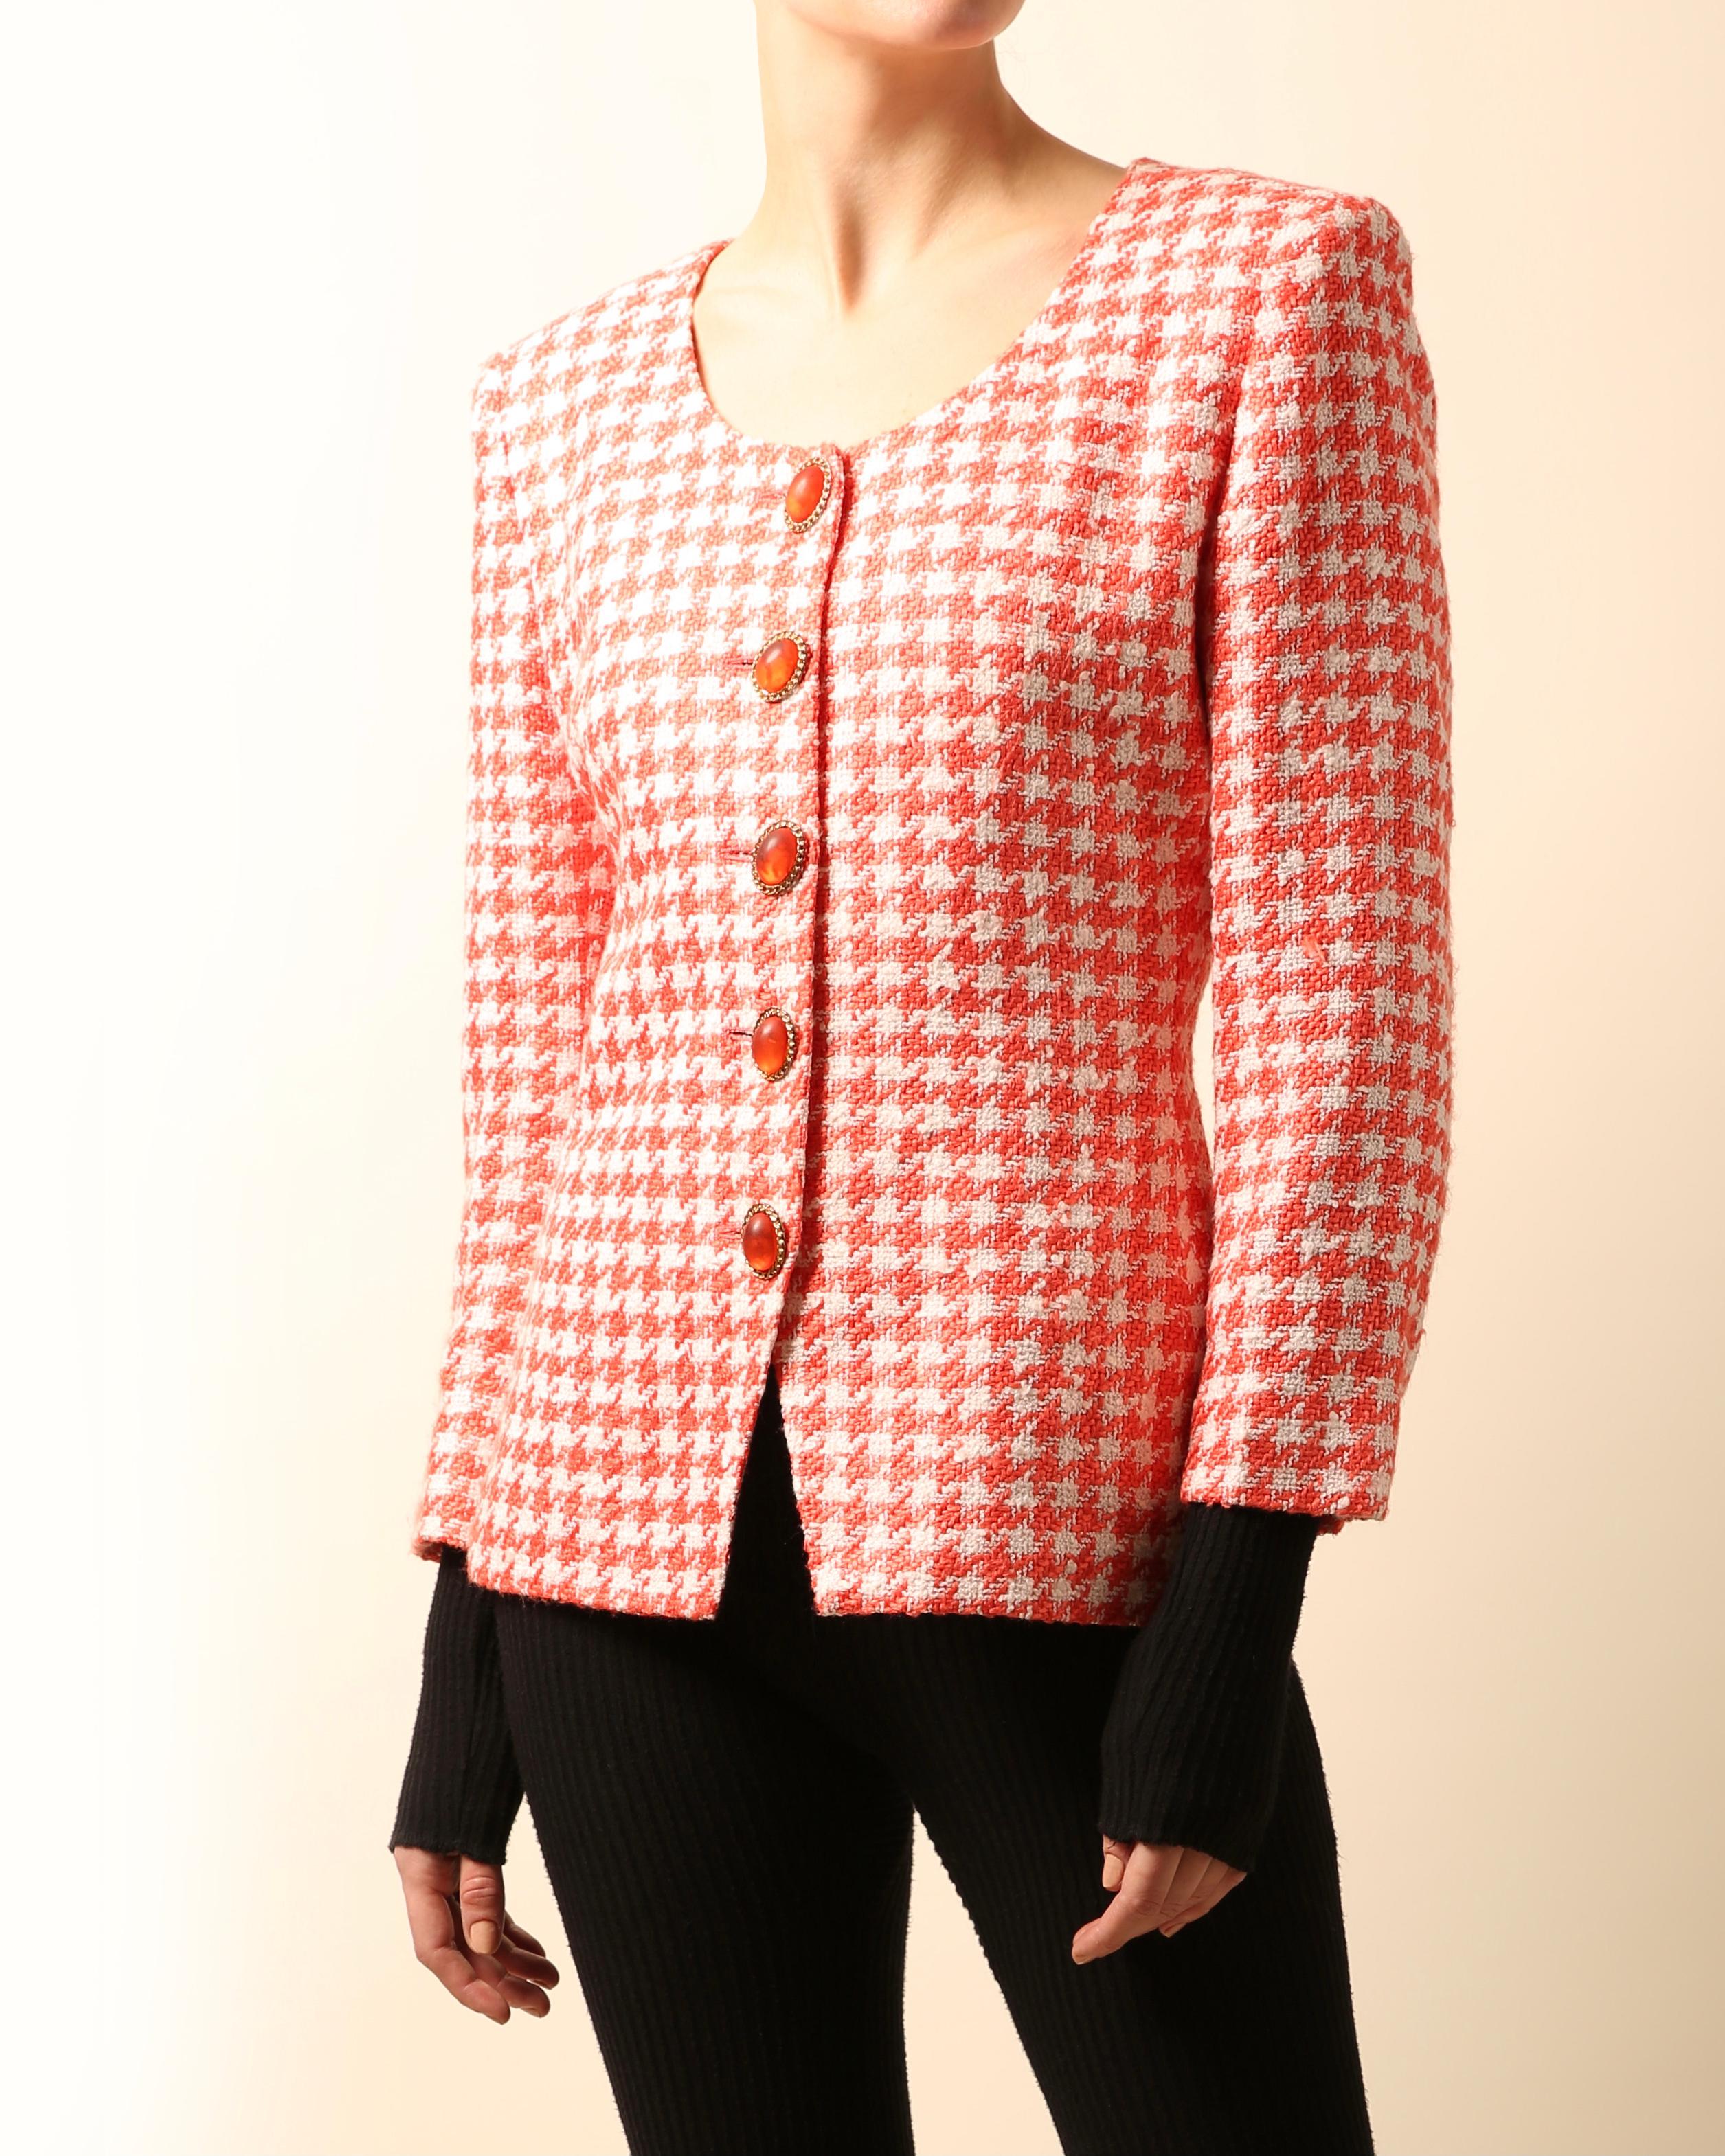 Christian Dior Vintage red white tweed gingham check print jewel blazer jacket 1